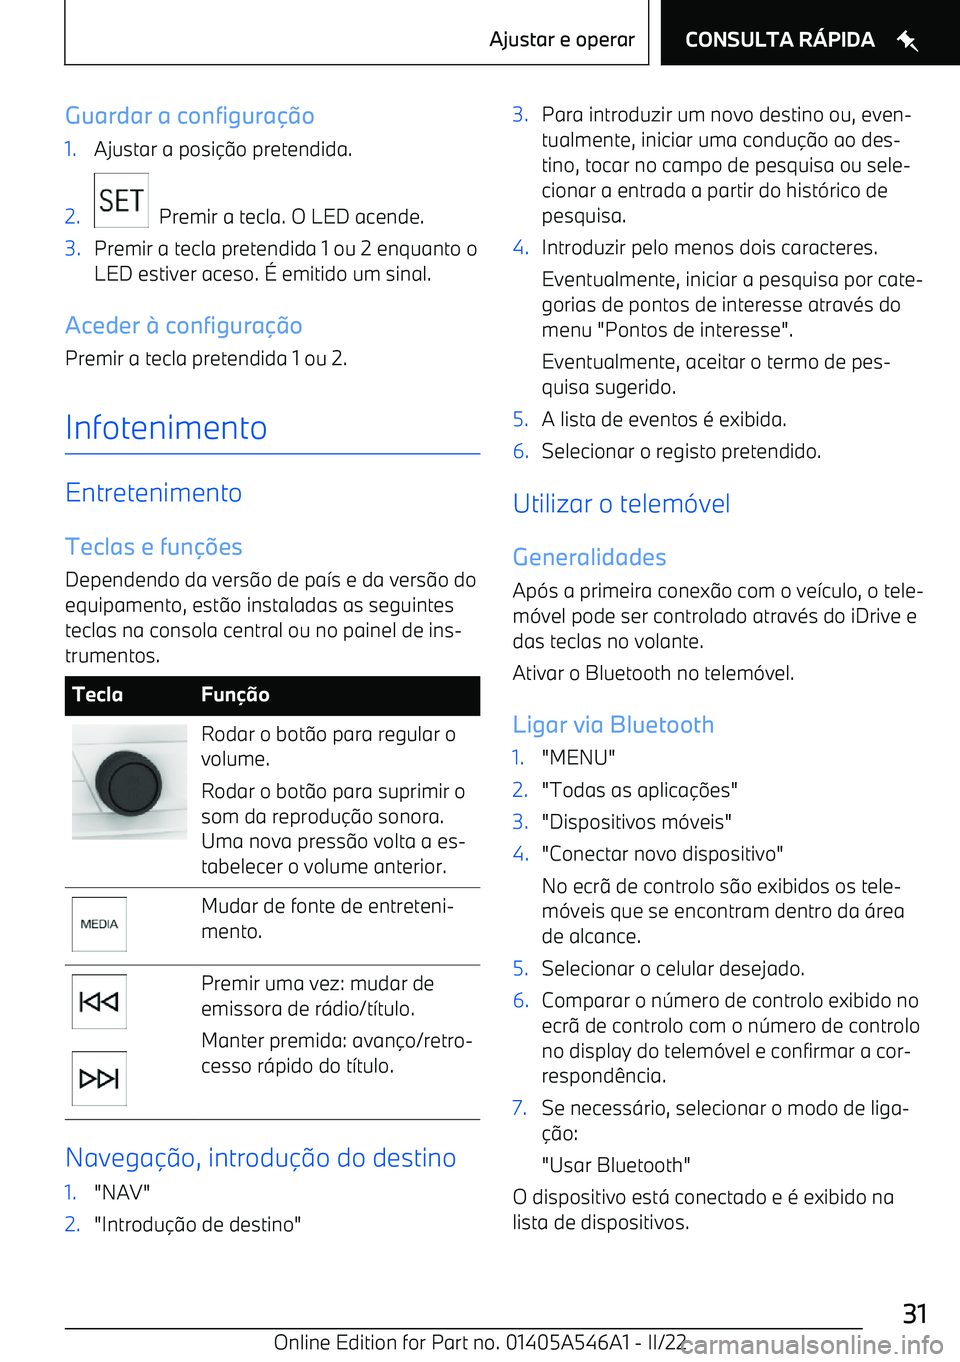 BMW I4 2022  Manual do condutor (in Portuguese) Guardar a configura